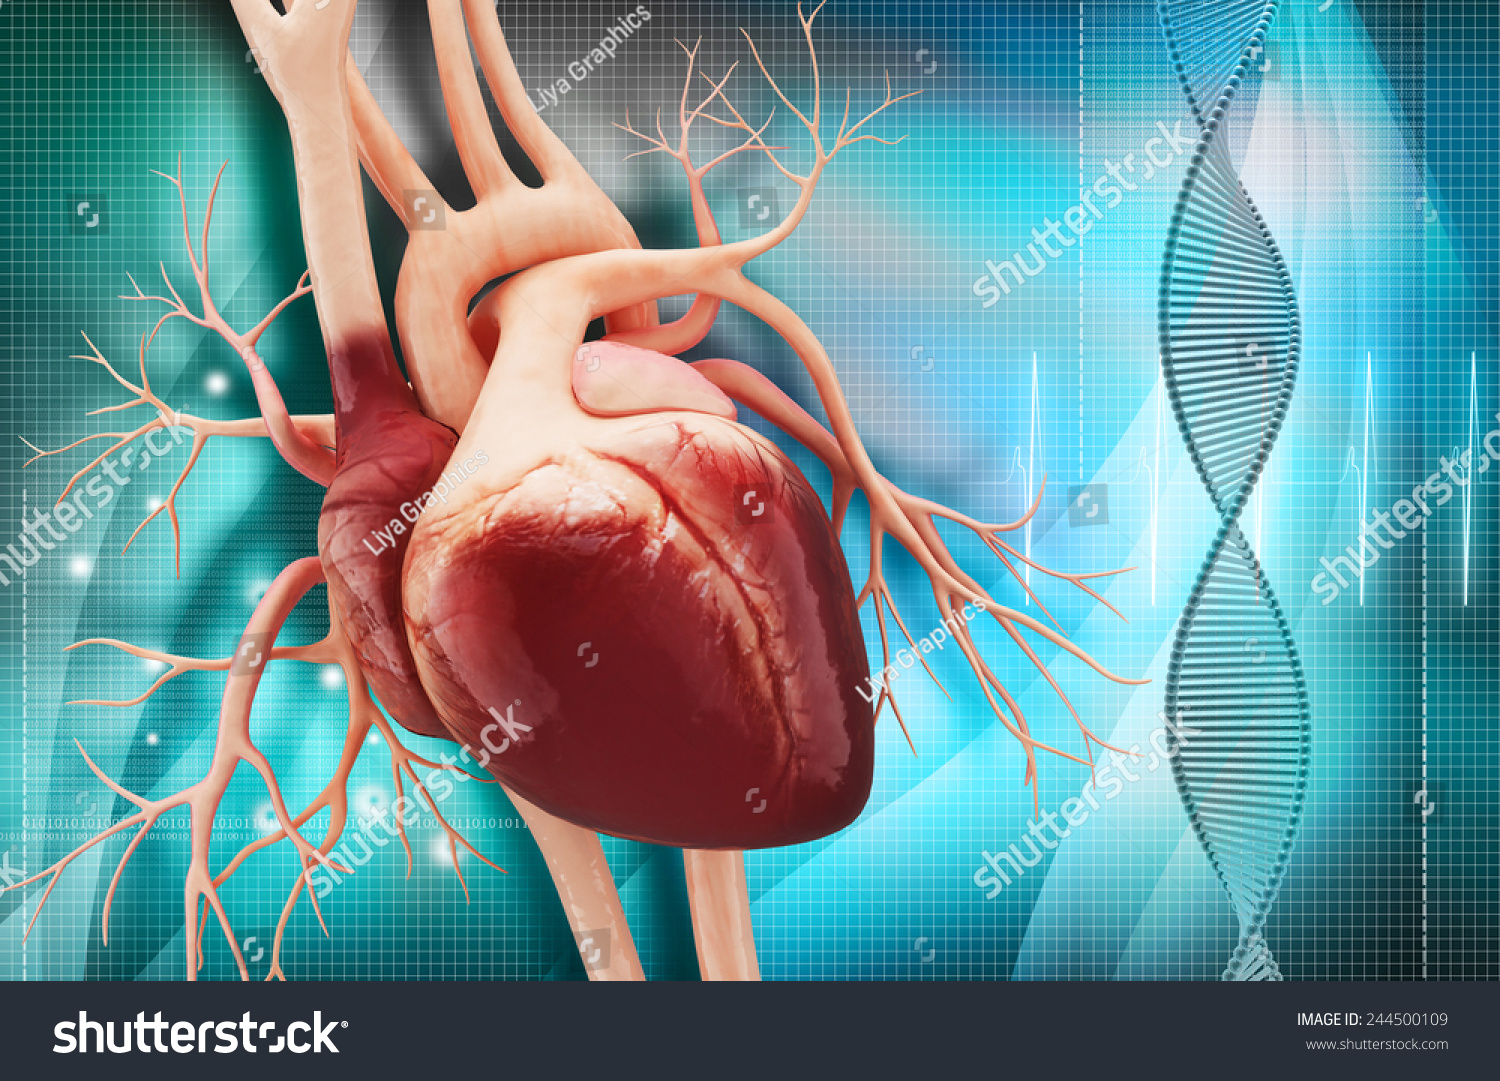 Anatomy Of Human Heart Stock Photo 244500109 Shutterstock